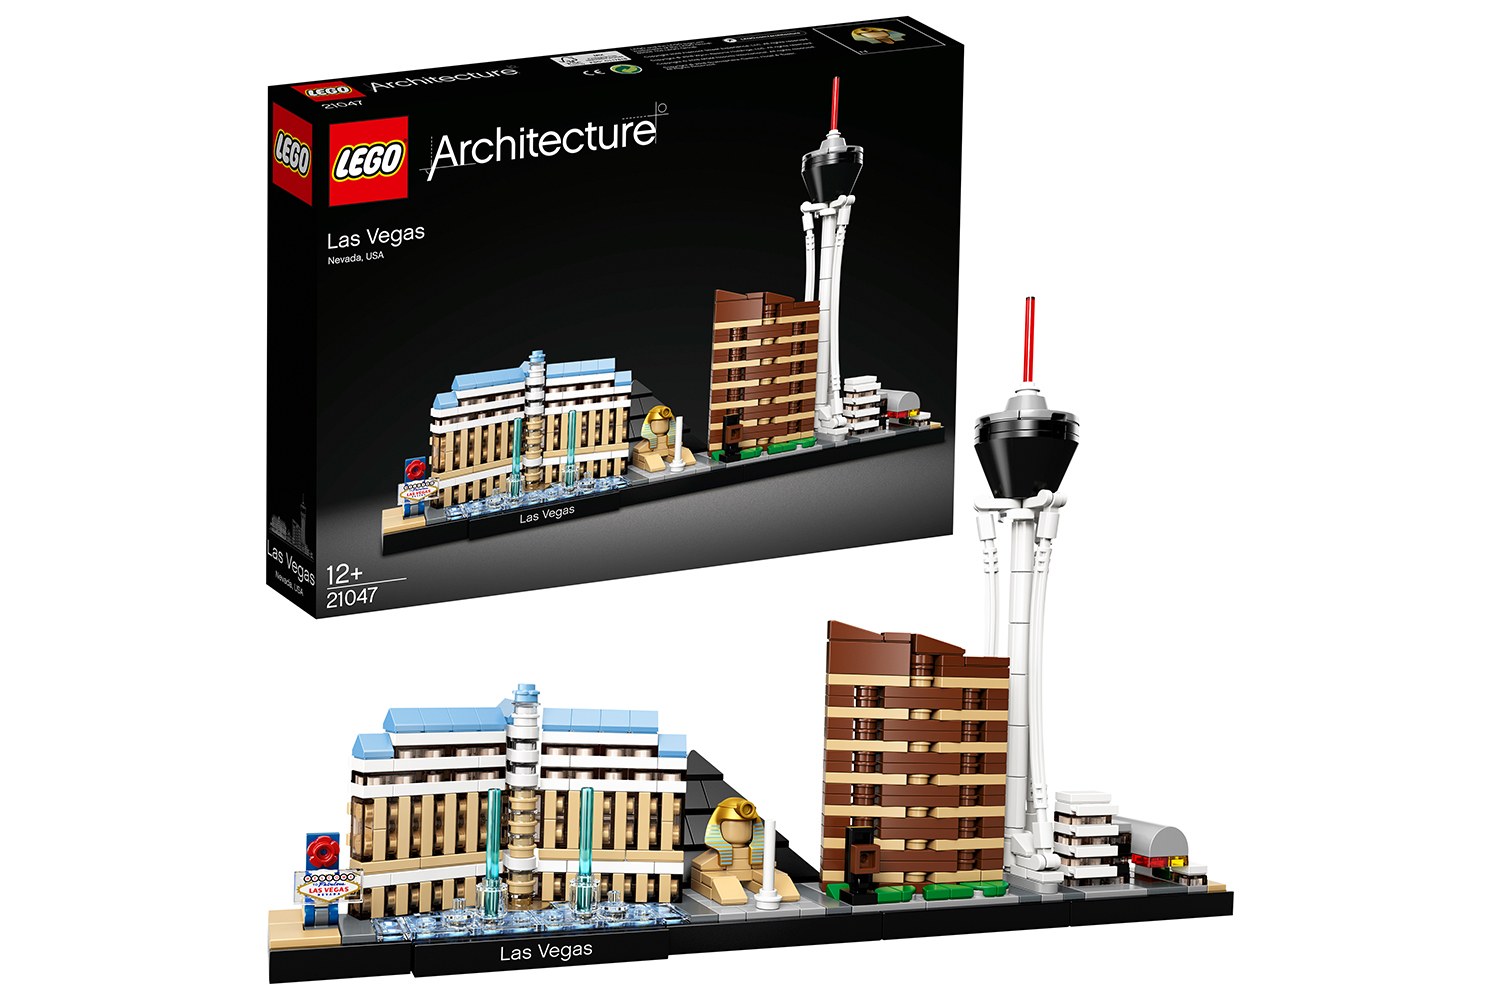 LEGO 21047 LAS VEGAS ARCHITECTURE